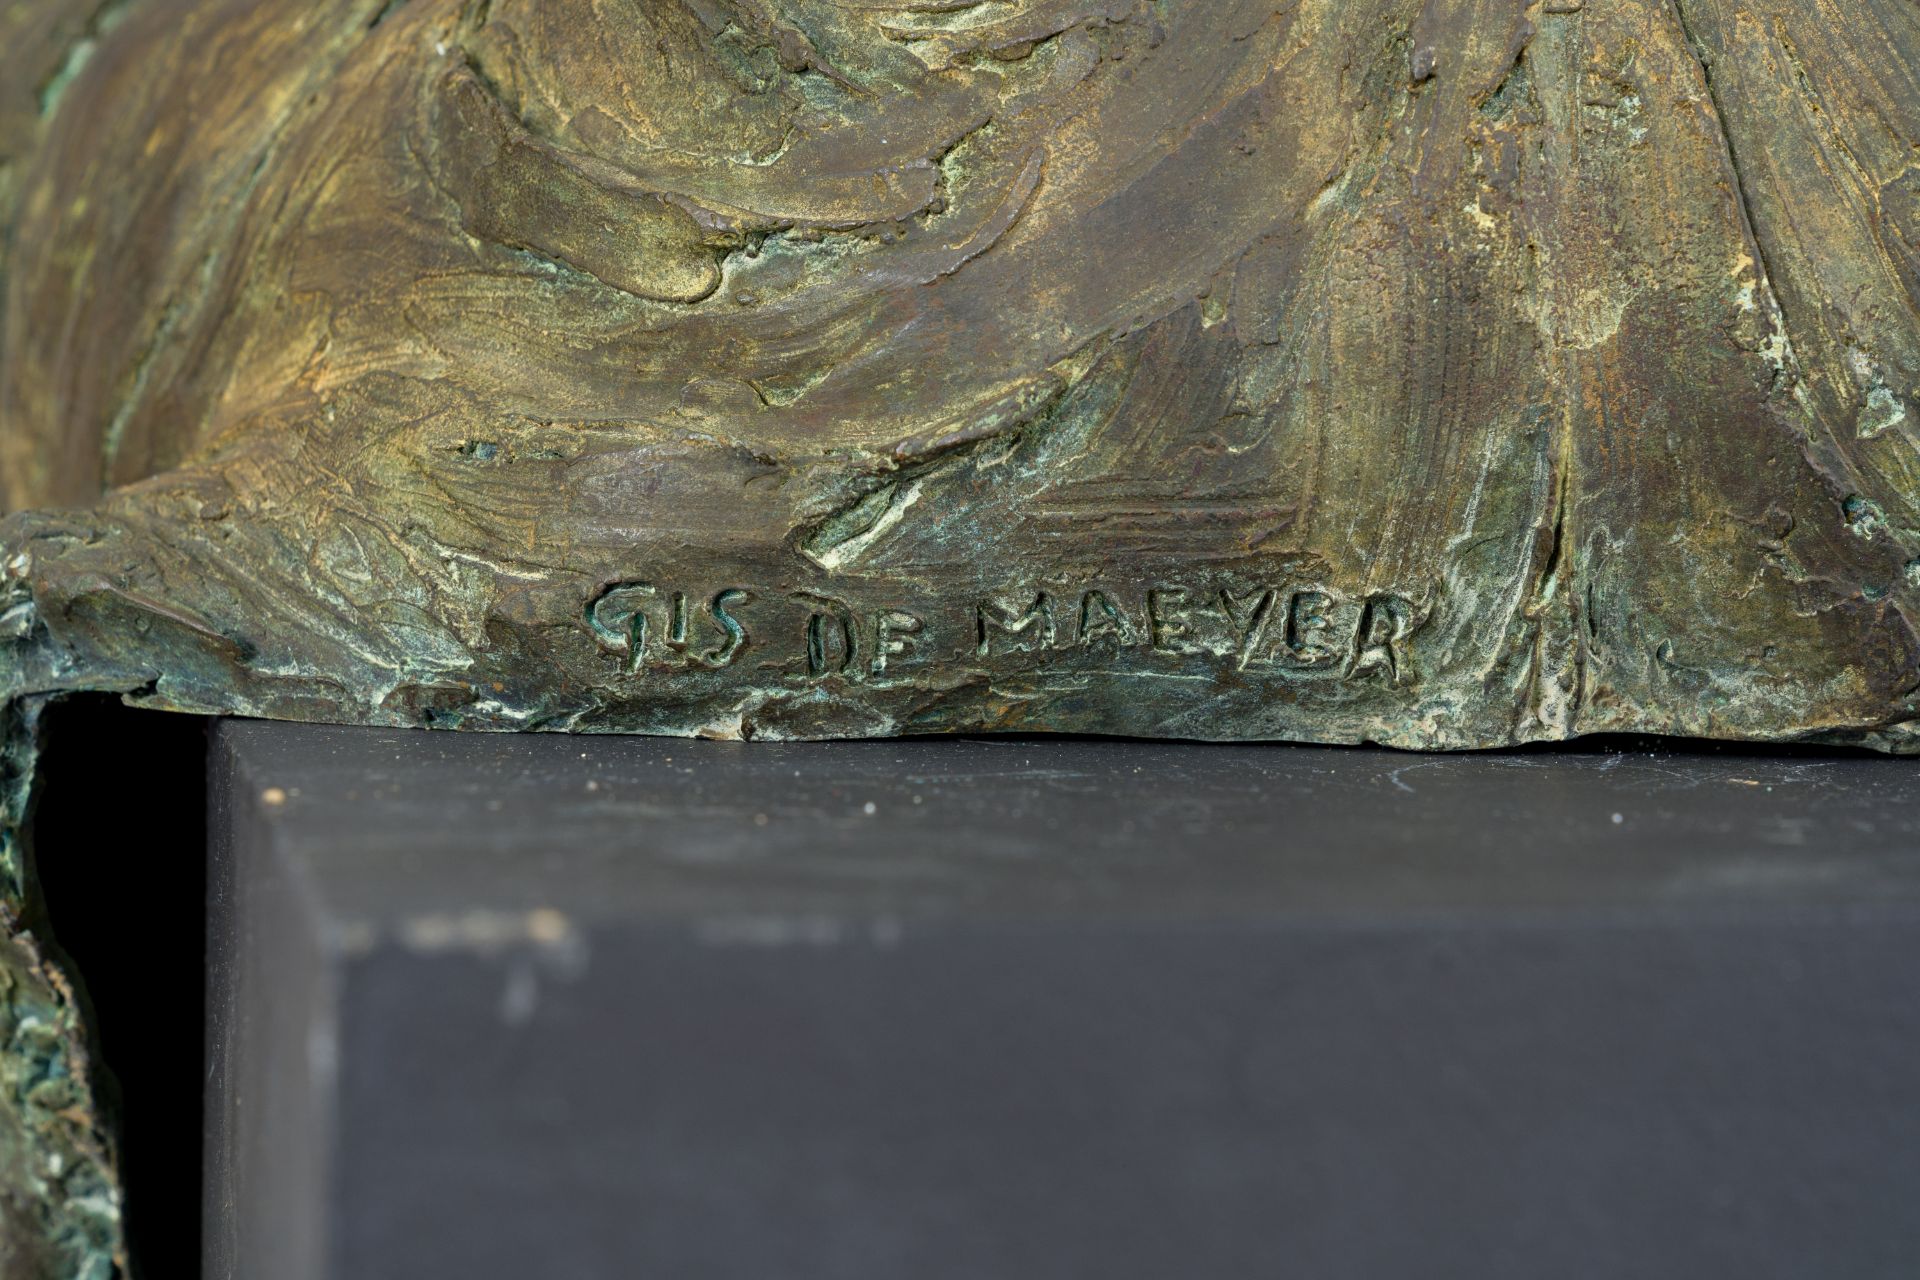 Gis De Maeyer (1942): 'Odine', patinated bronze, ed. 4/8 - Image 8 of 11